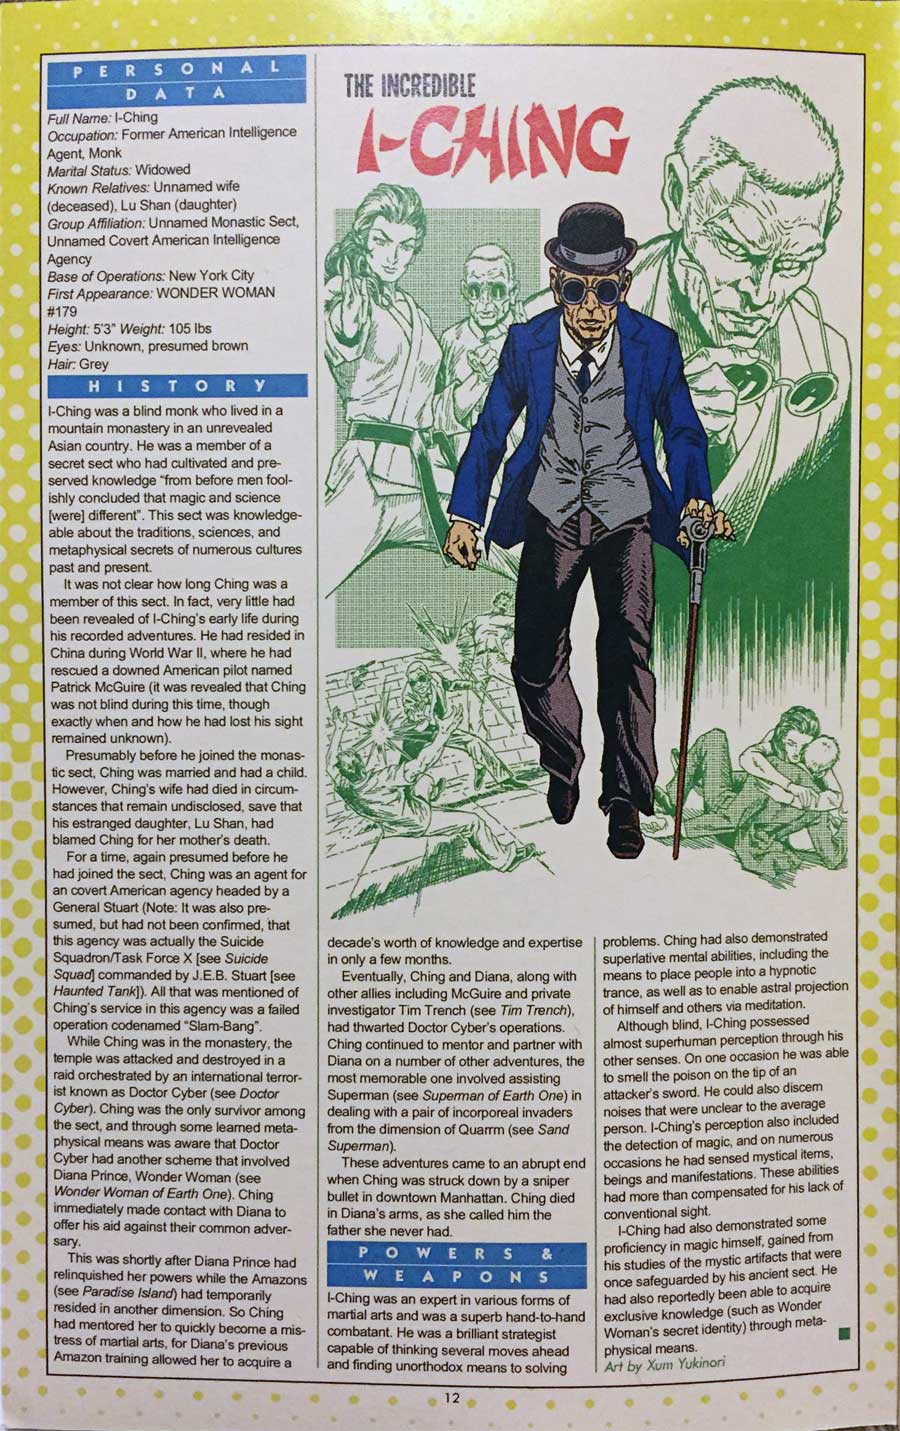 Xum Yukinori’s Addendum to the Definitive Directory of the DC Universe - The Incredible I-Ching 